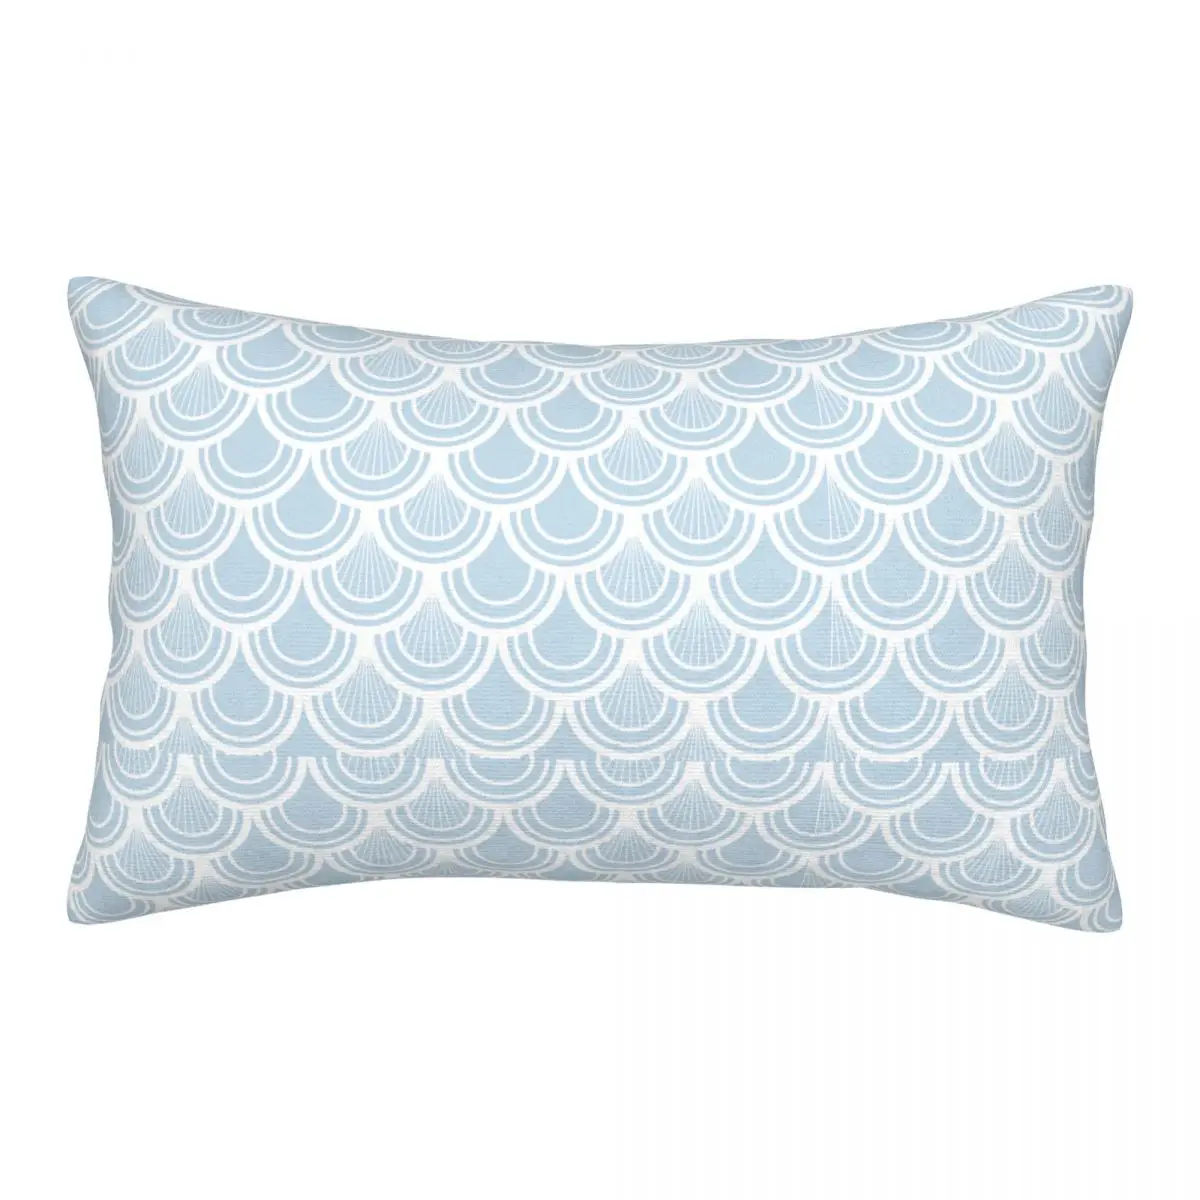 

White Fish Grain Pillowcase Polyester Plush Printed Zip Decor Throw Pillow Case Home Cushion Cover Sofa Bedroom Office